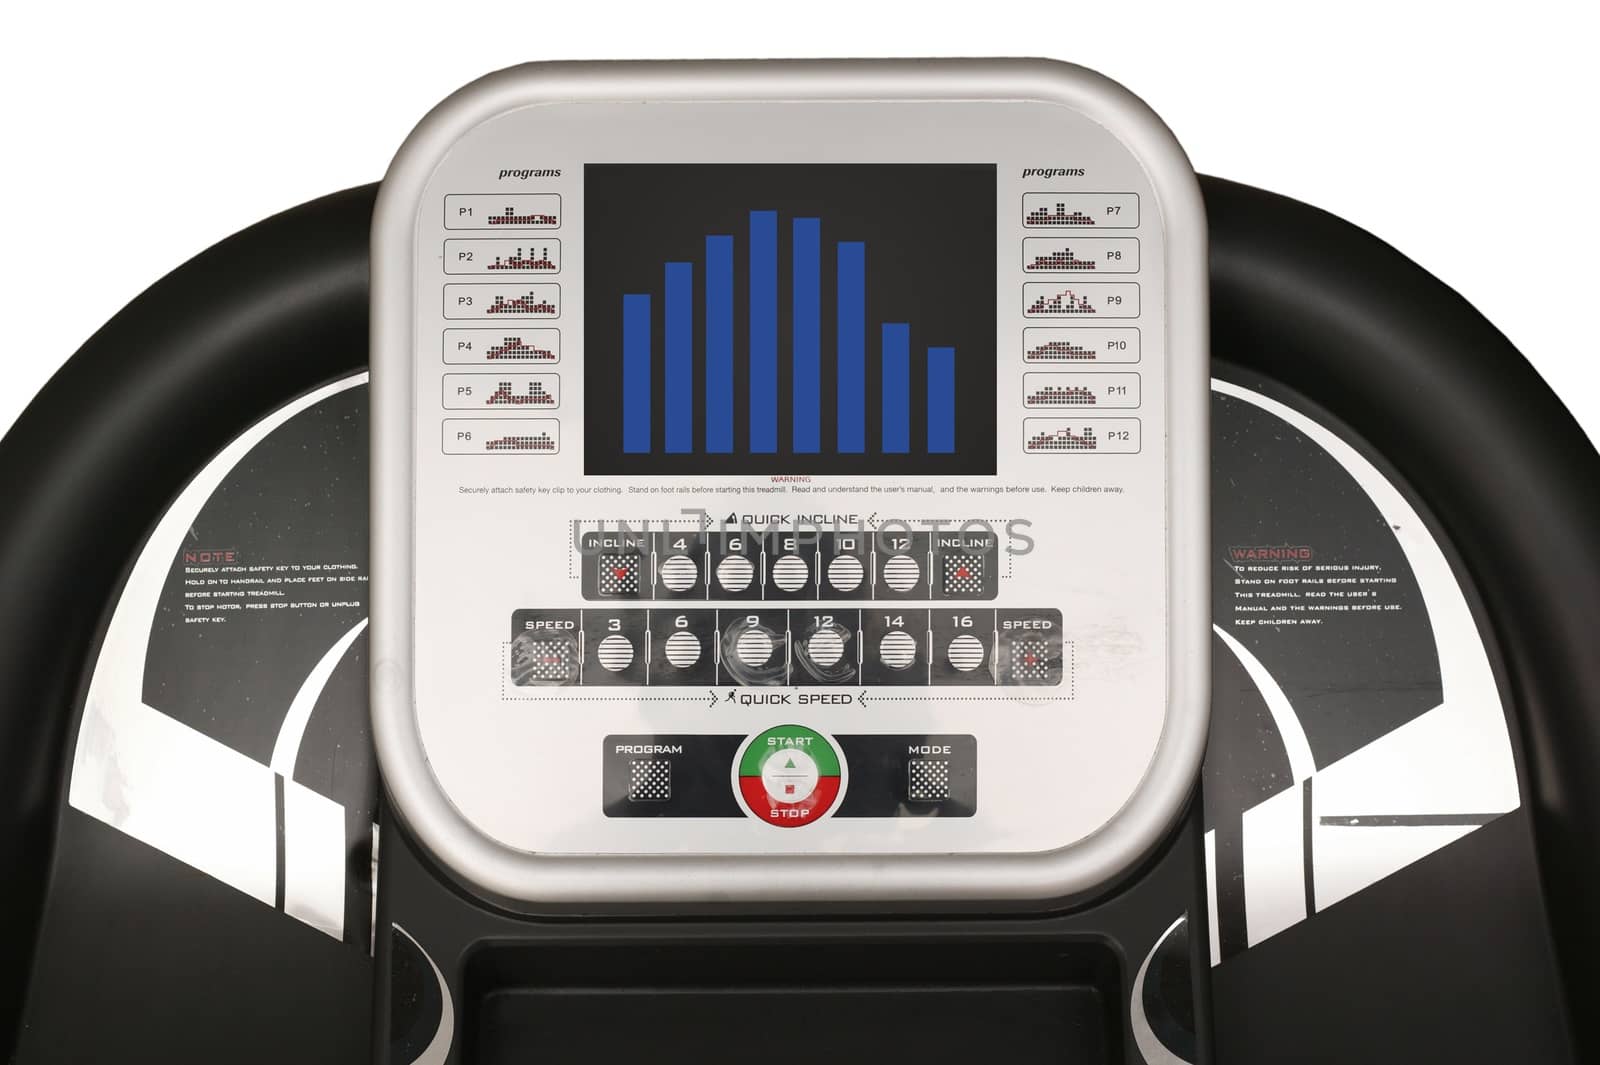 An exercise treadmill on a plain background